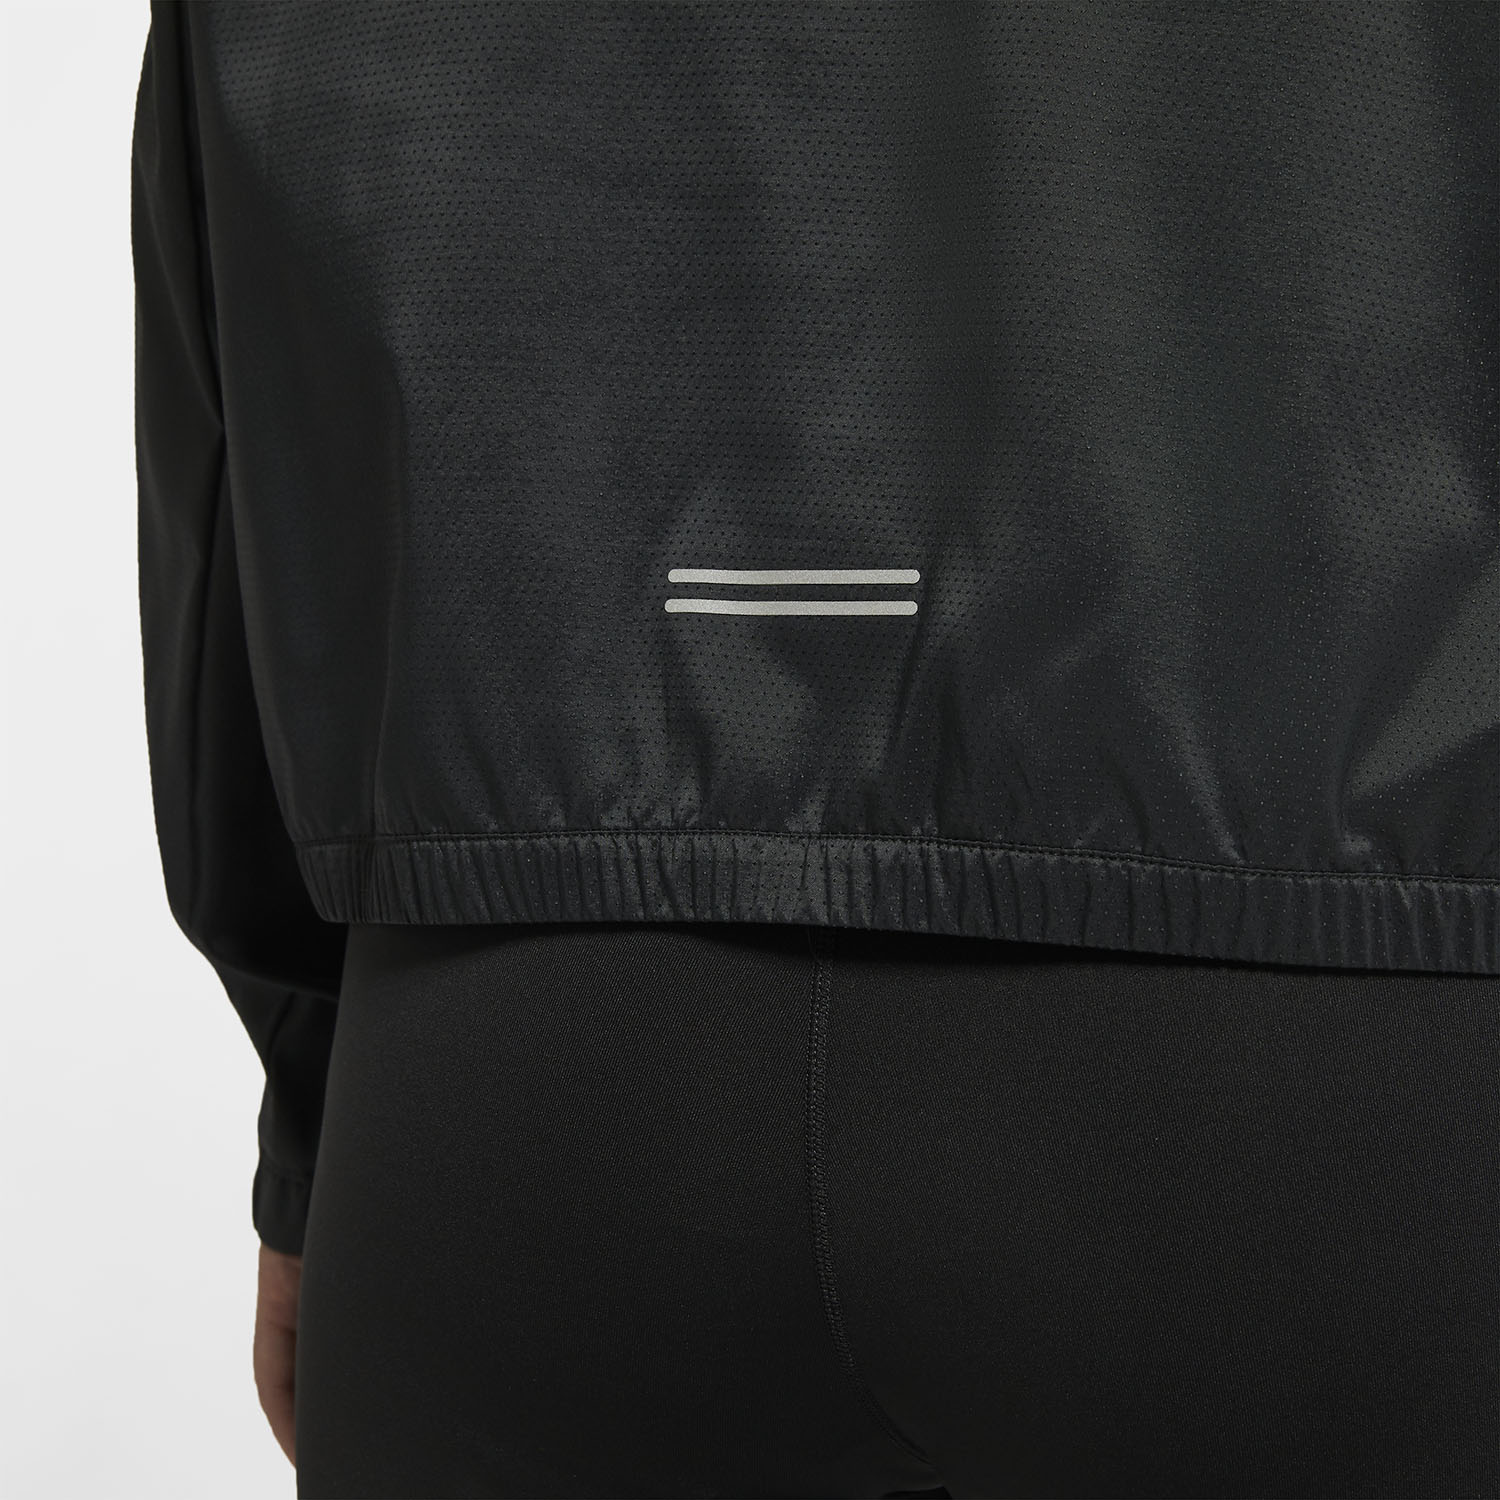 Nike Impossibly Light Jacket - Black/Reflective Silver